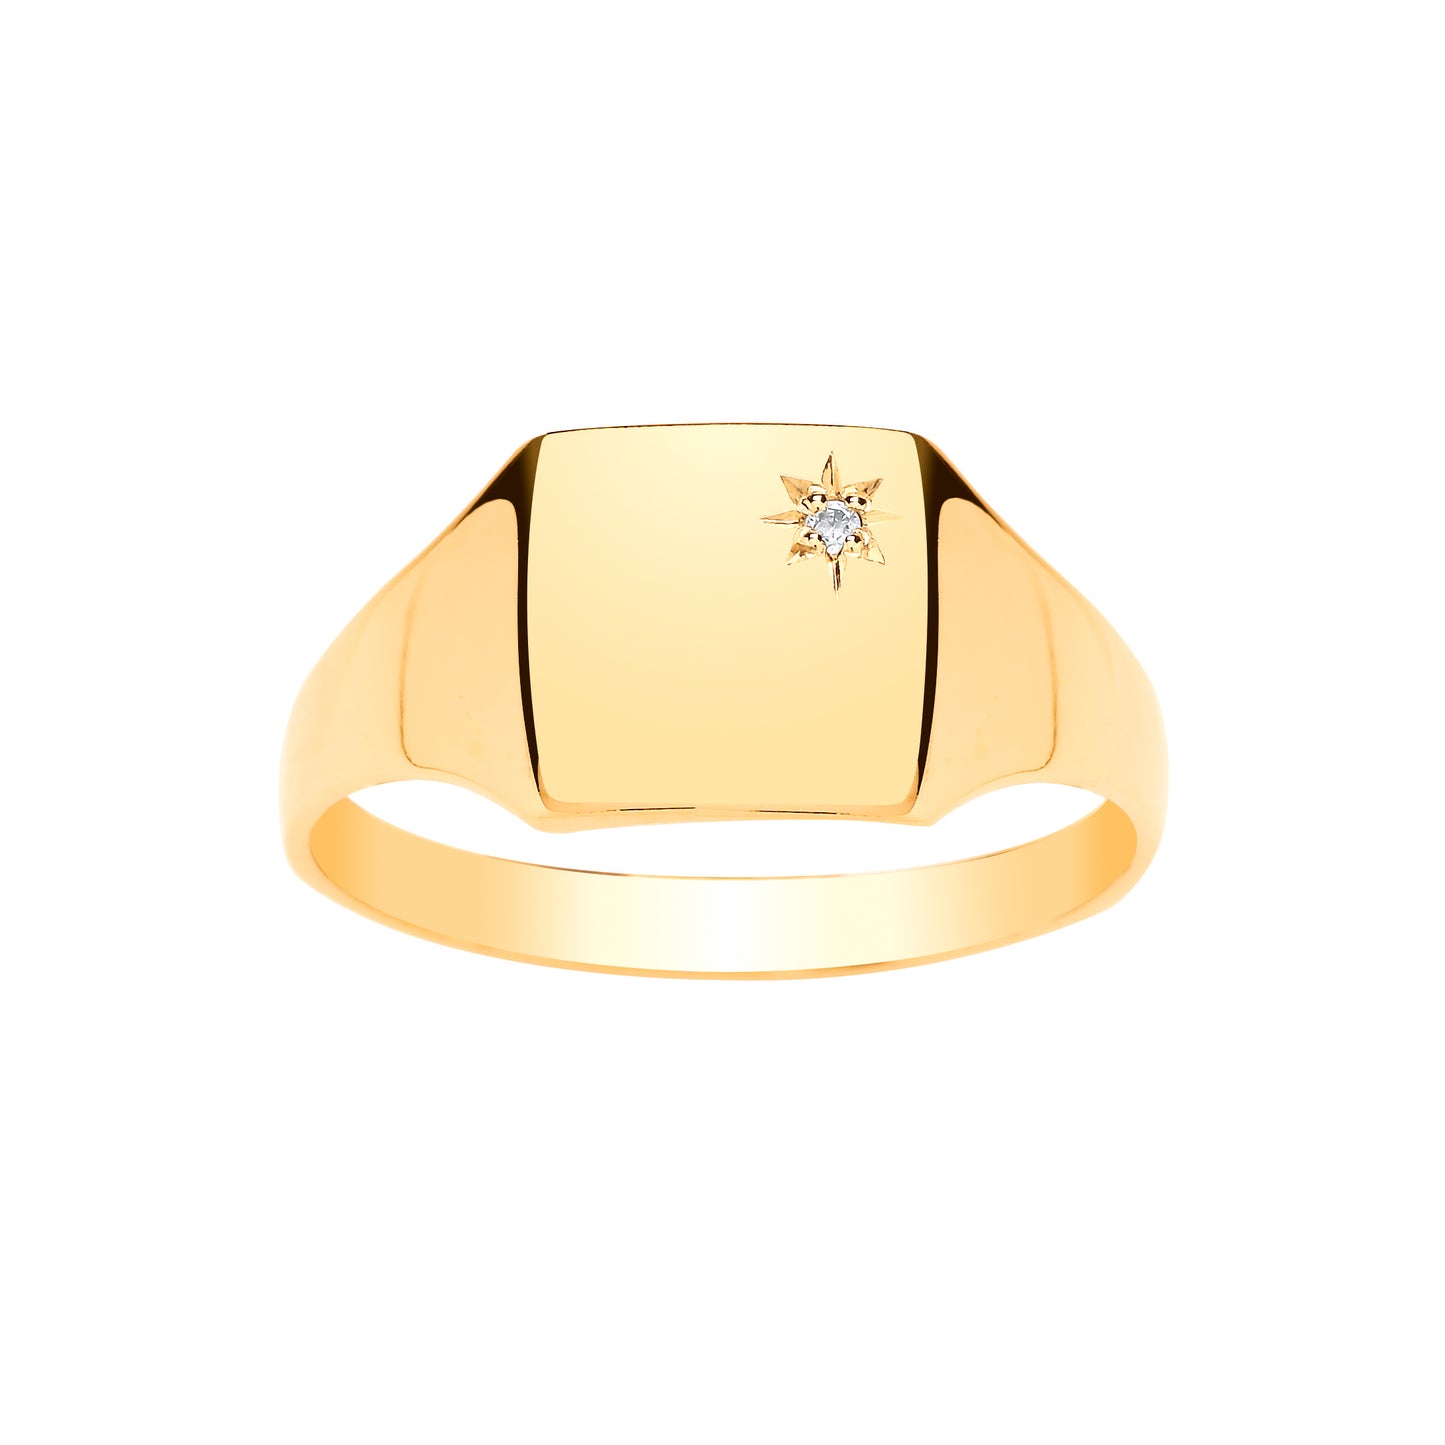 Square shaped yellow gold mens diamond set signet ring